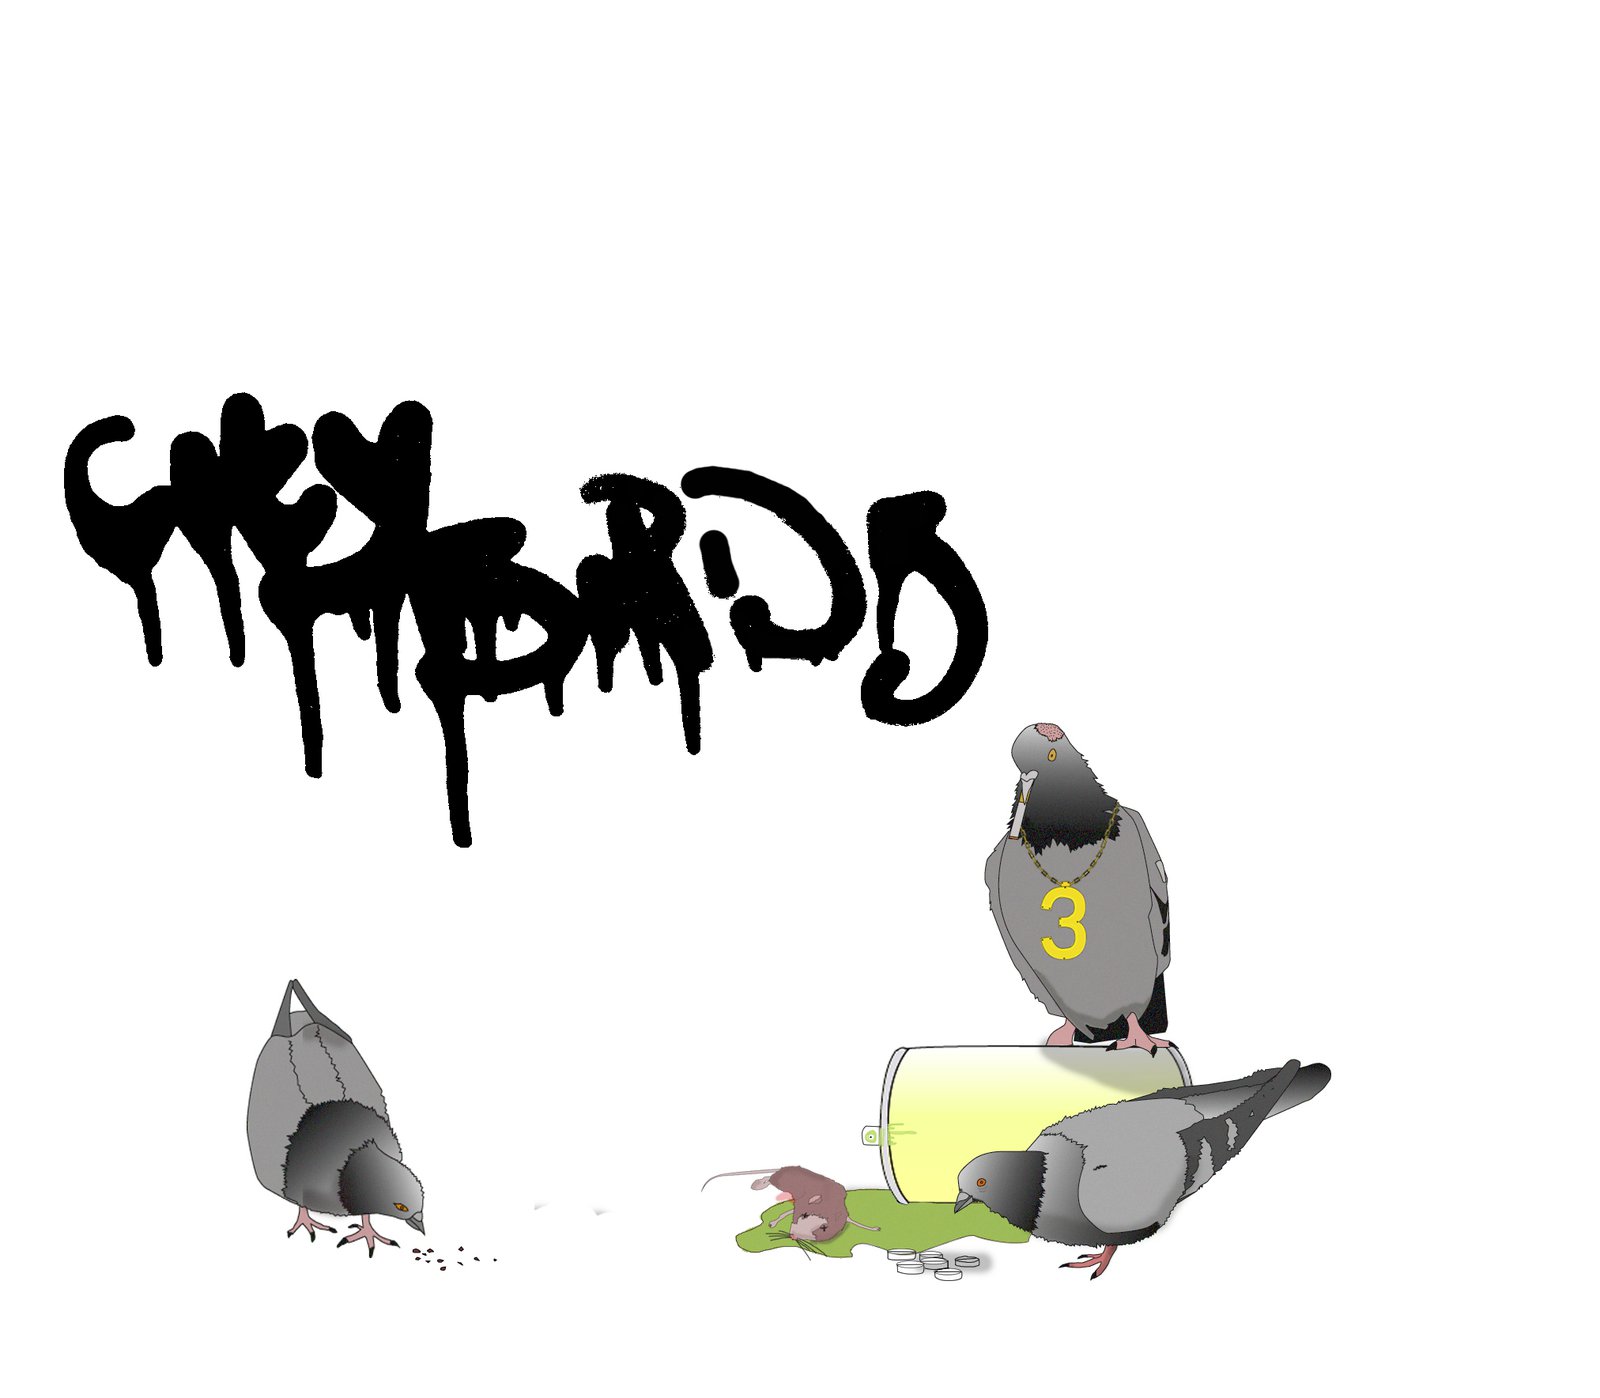 City birds and hood rats